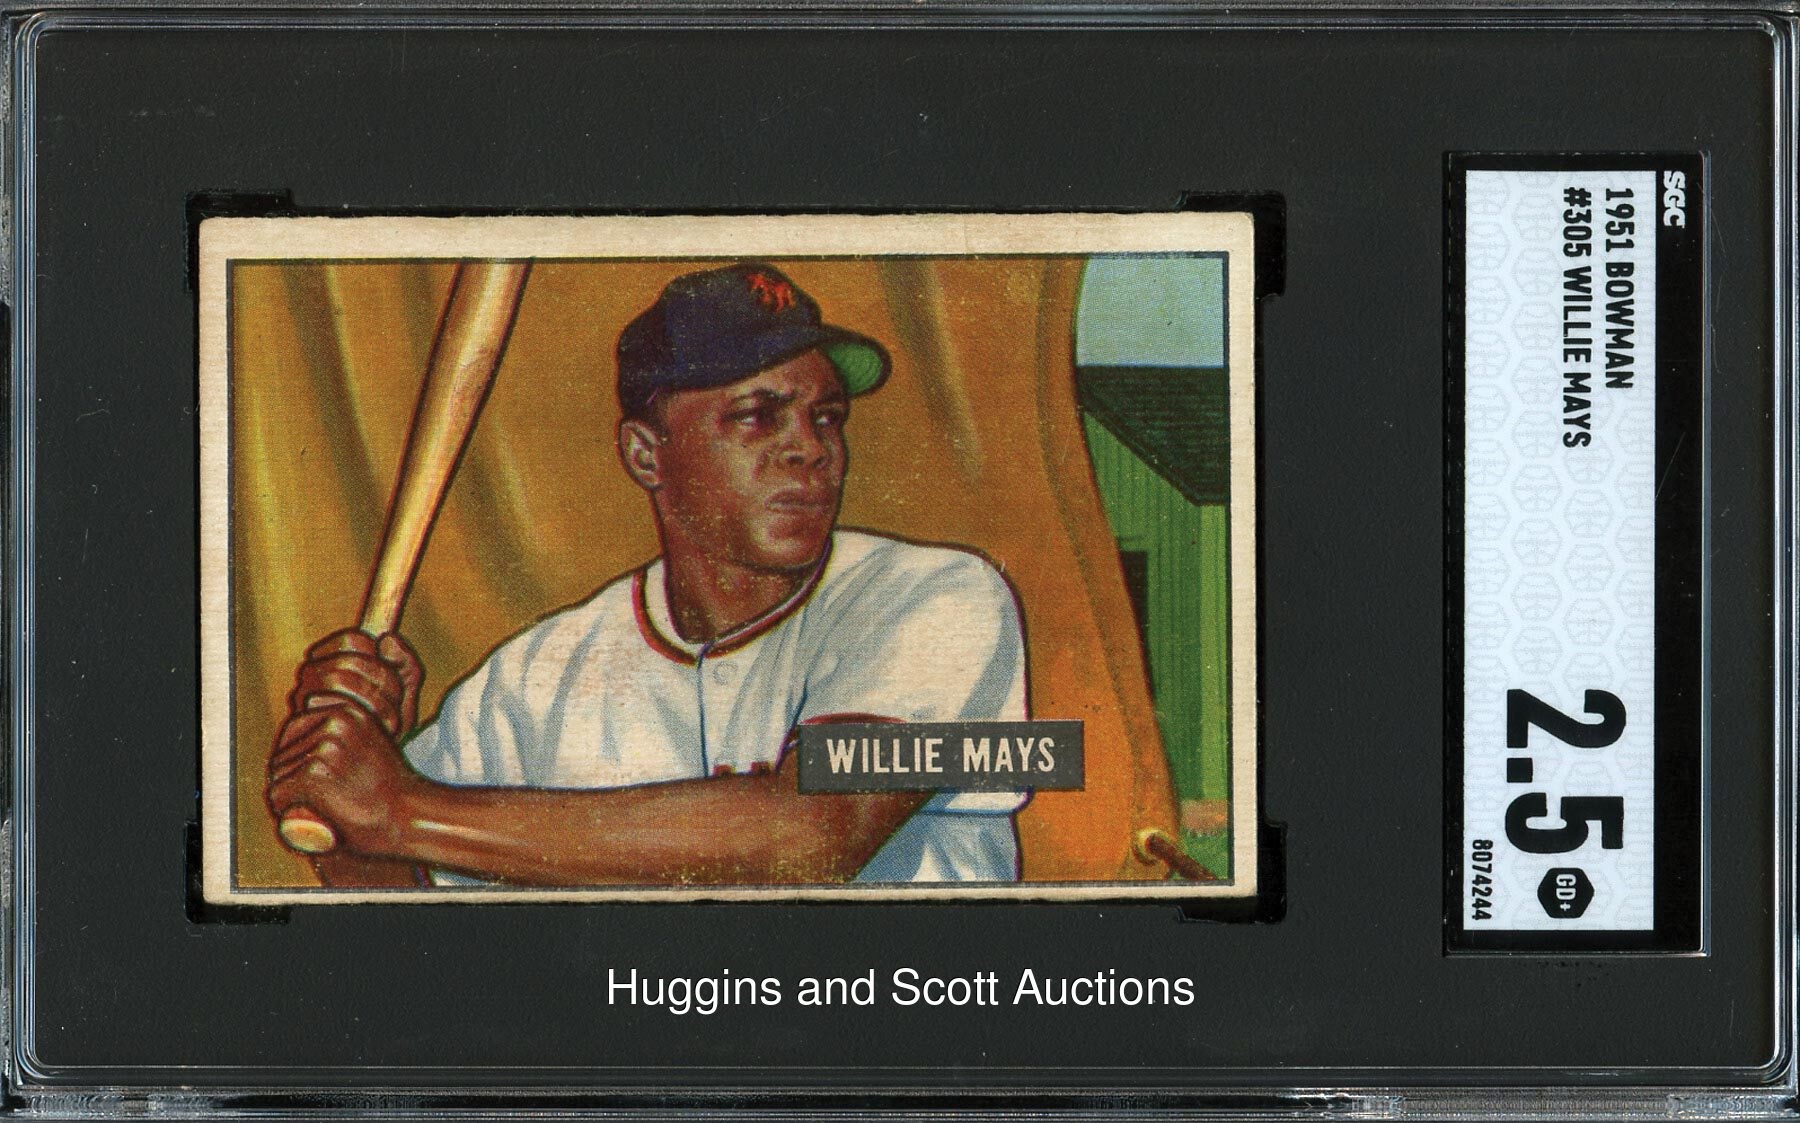 1951 Bowman Baseball #305 Willie Mays Rookie - SGC 2.5 Good+